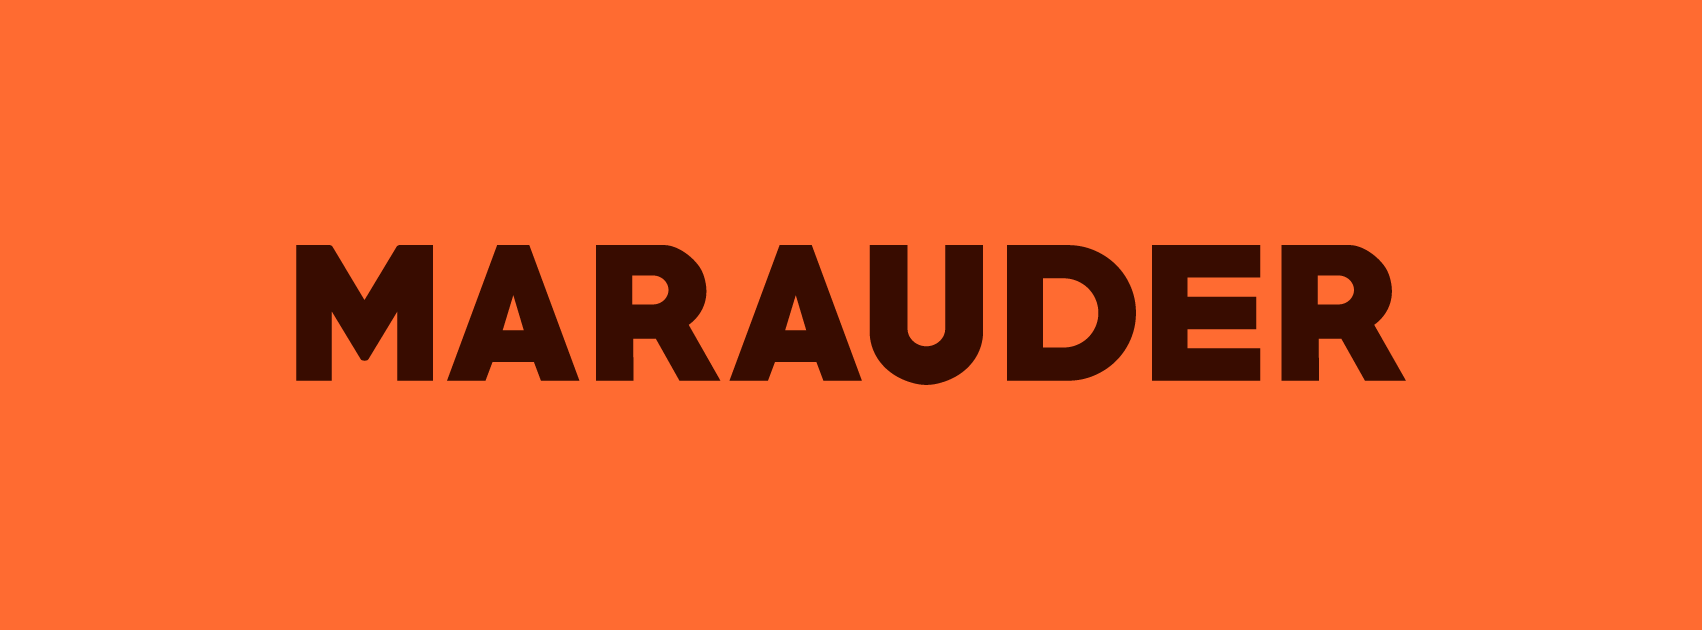 Marauder-logo-banner.png